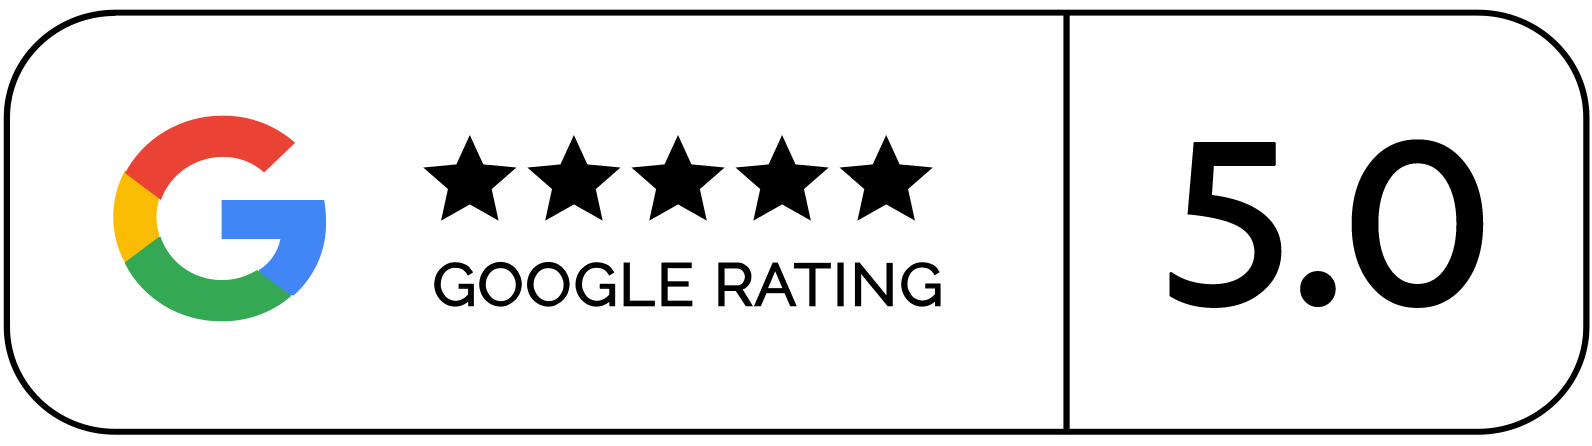 Image On Line Google Rating 5.0 Google Review Rating